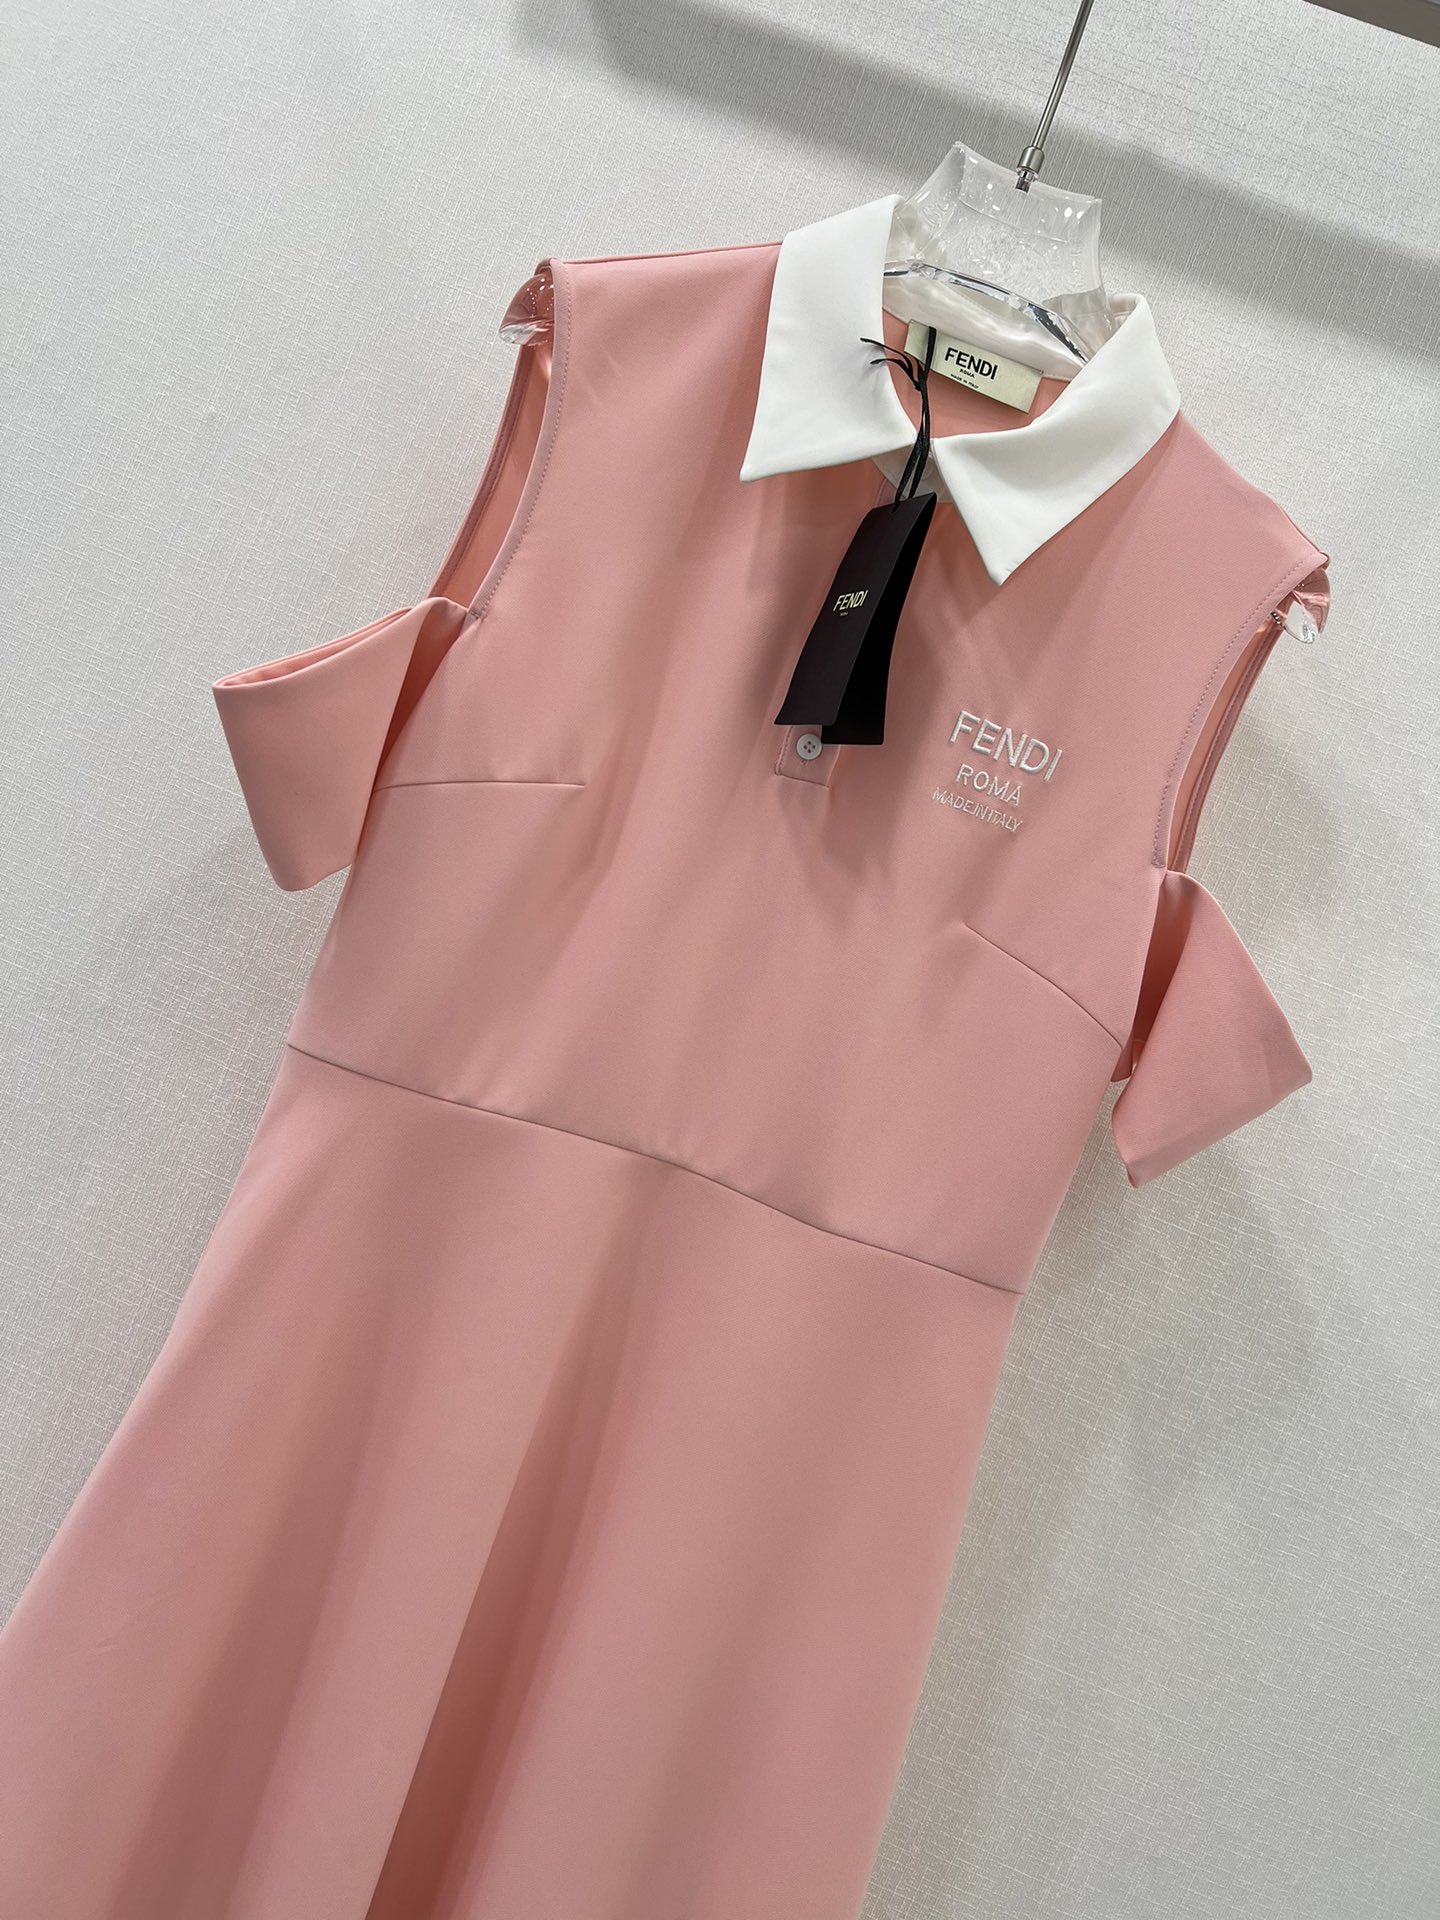 fendi キッズ ワンピーススーパーコピー 魅力的なスタイル スカート セクシー 優雅 高級品 ピンク_4